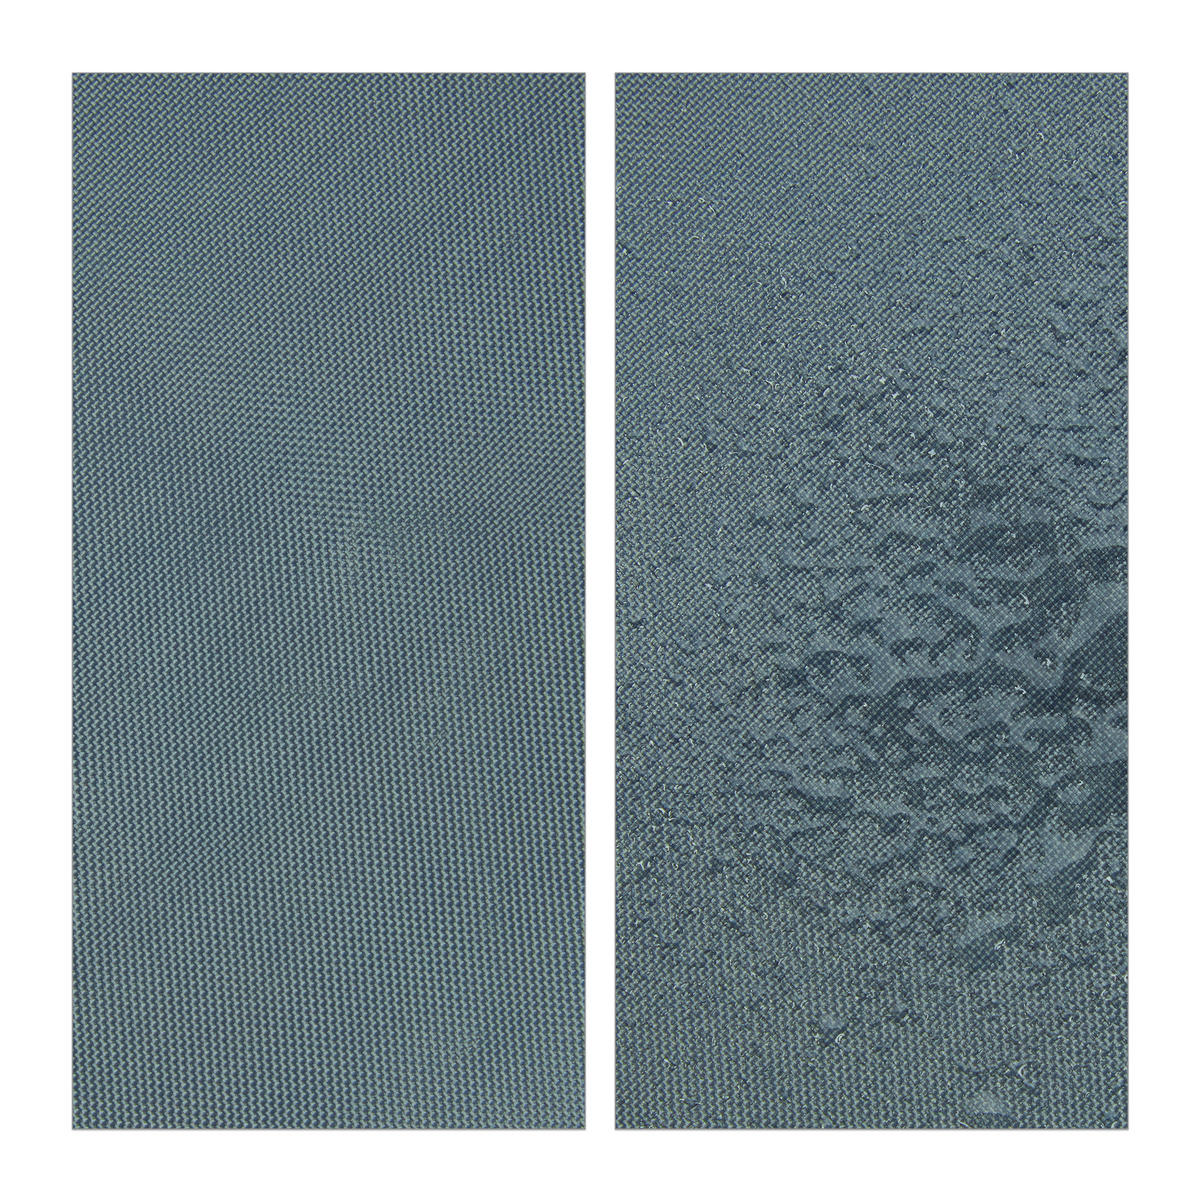 SONNENSEGEL - Blaugrau, Textil/Metall (400/600/0.1cm) - Relaxdays